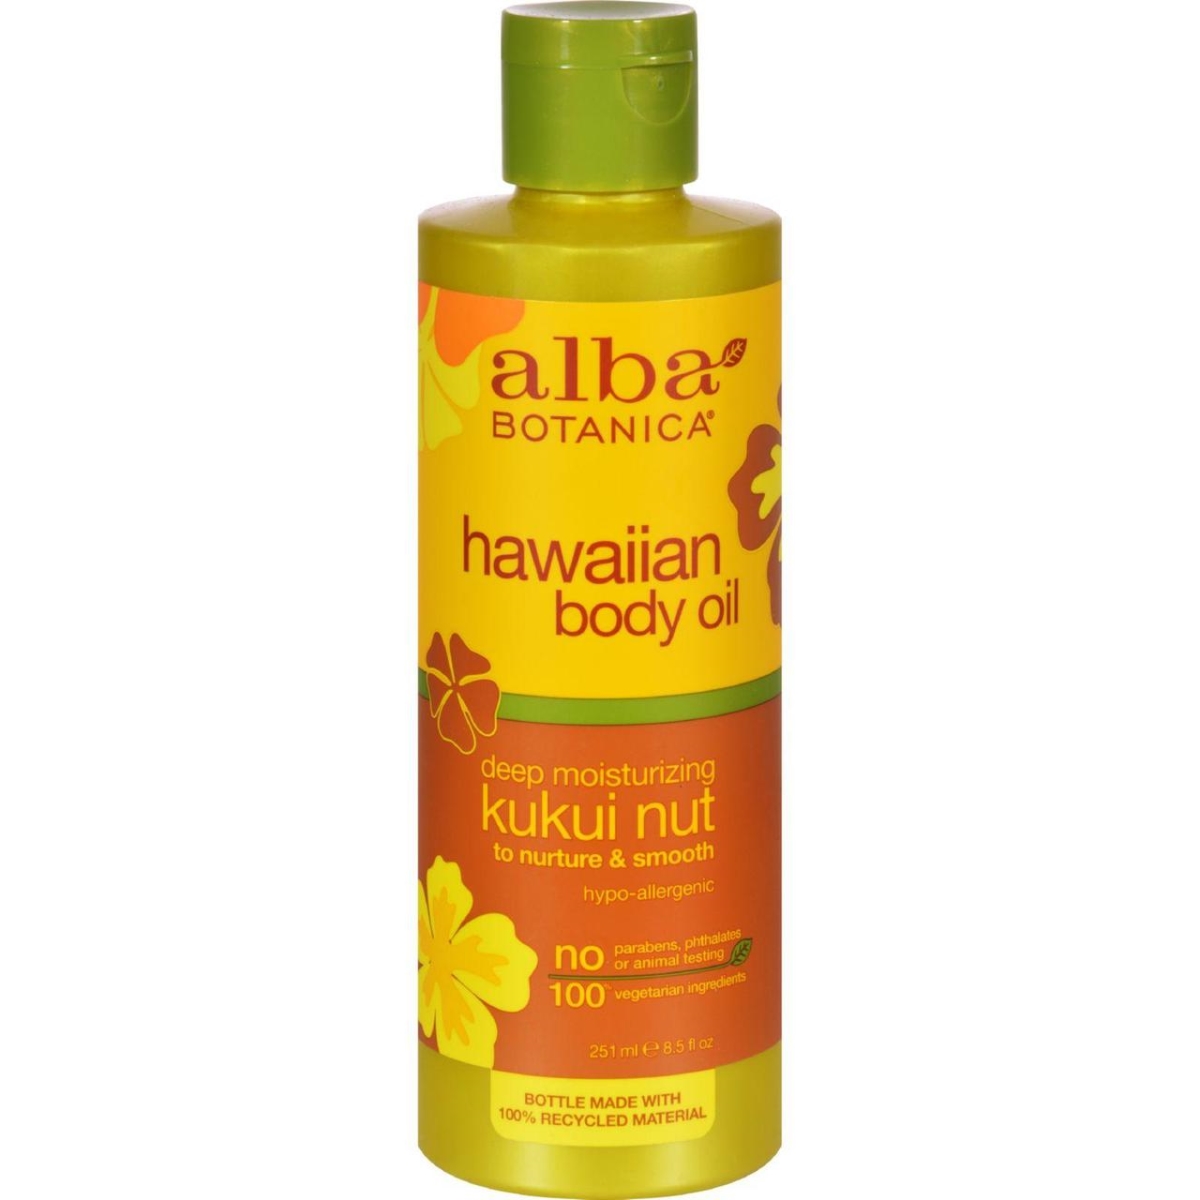 Hg0389999 8.5 Fl Oz Hawaiian Body Oil, Kukui Nut